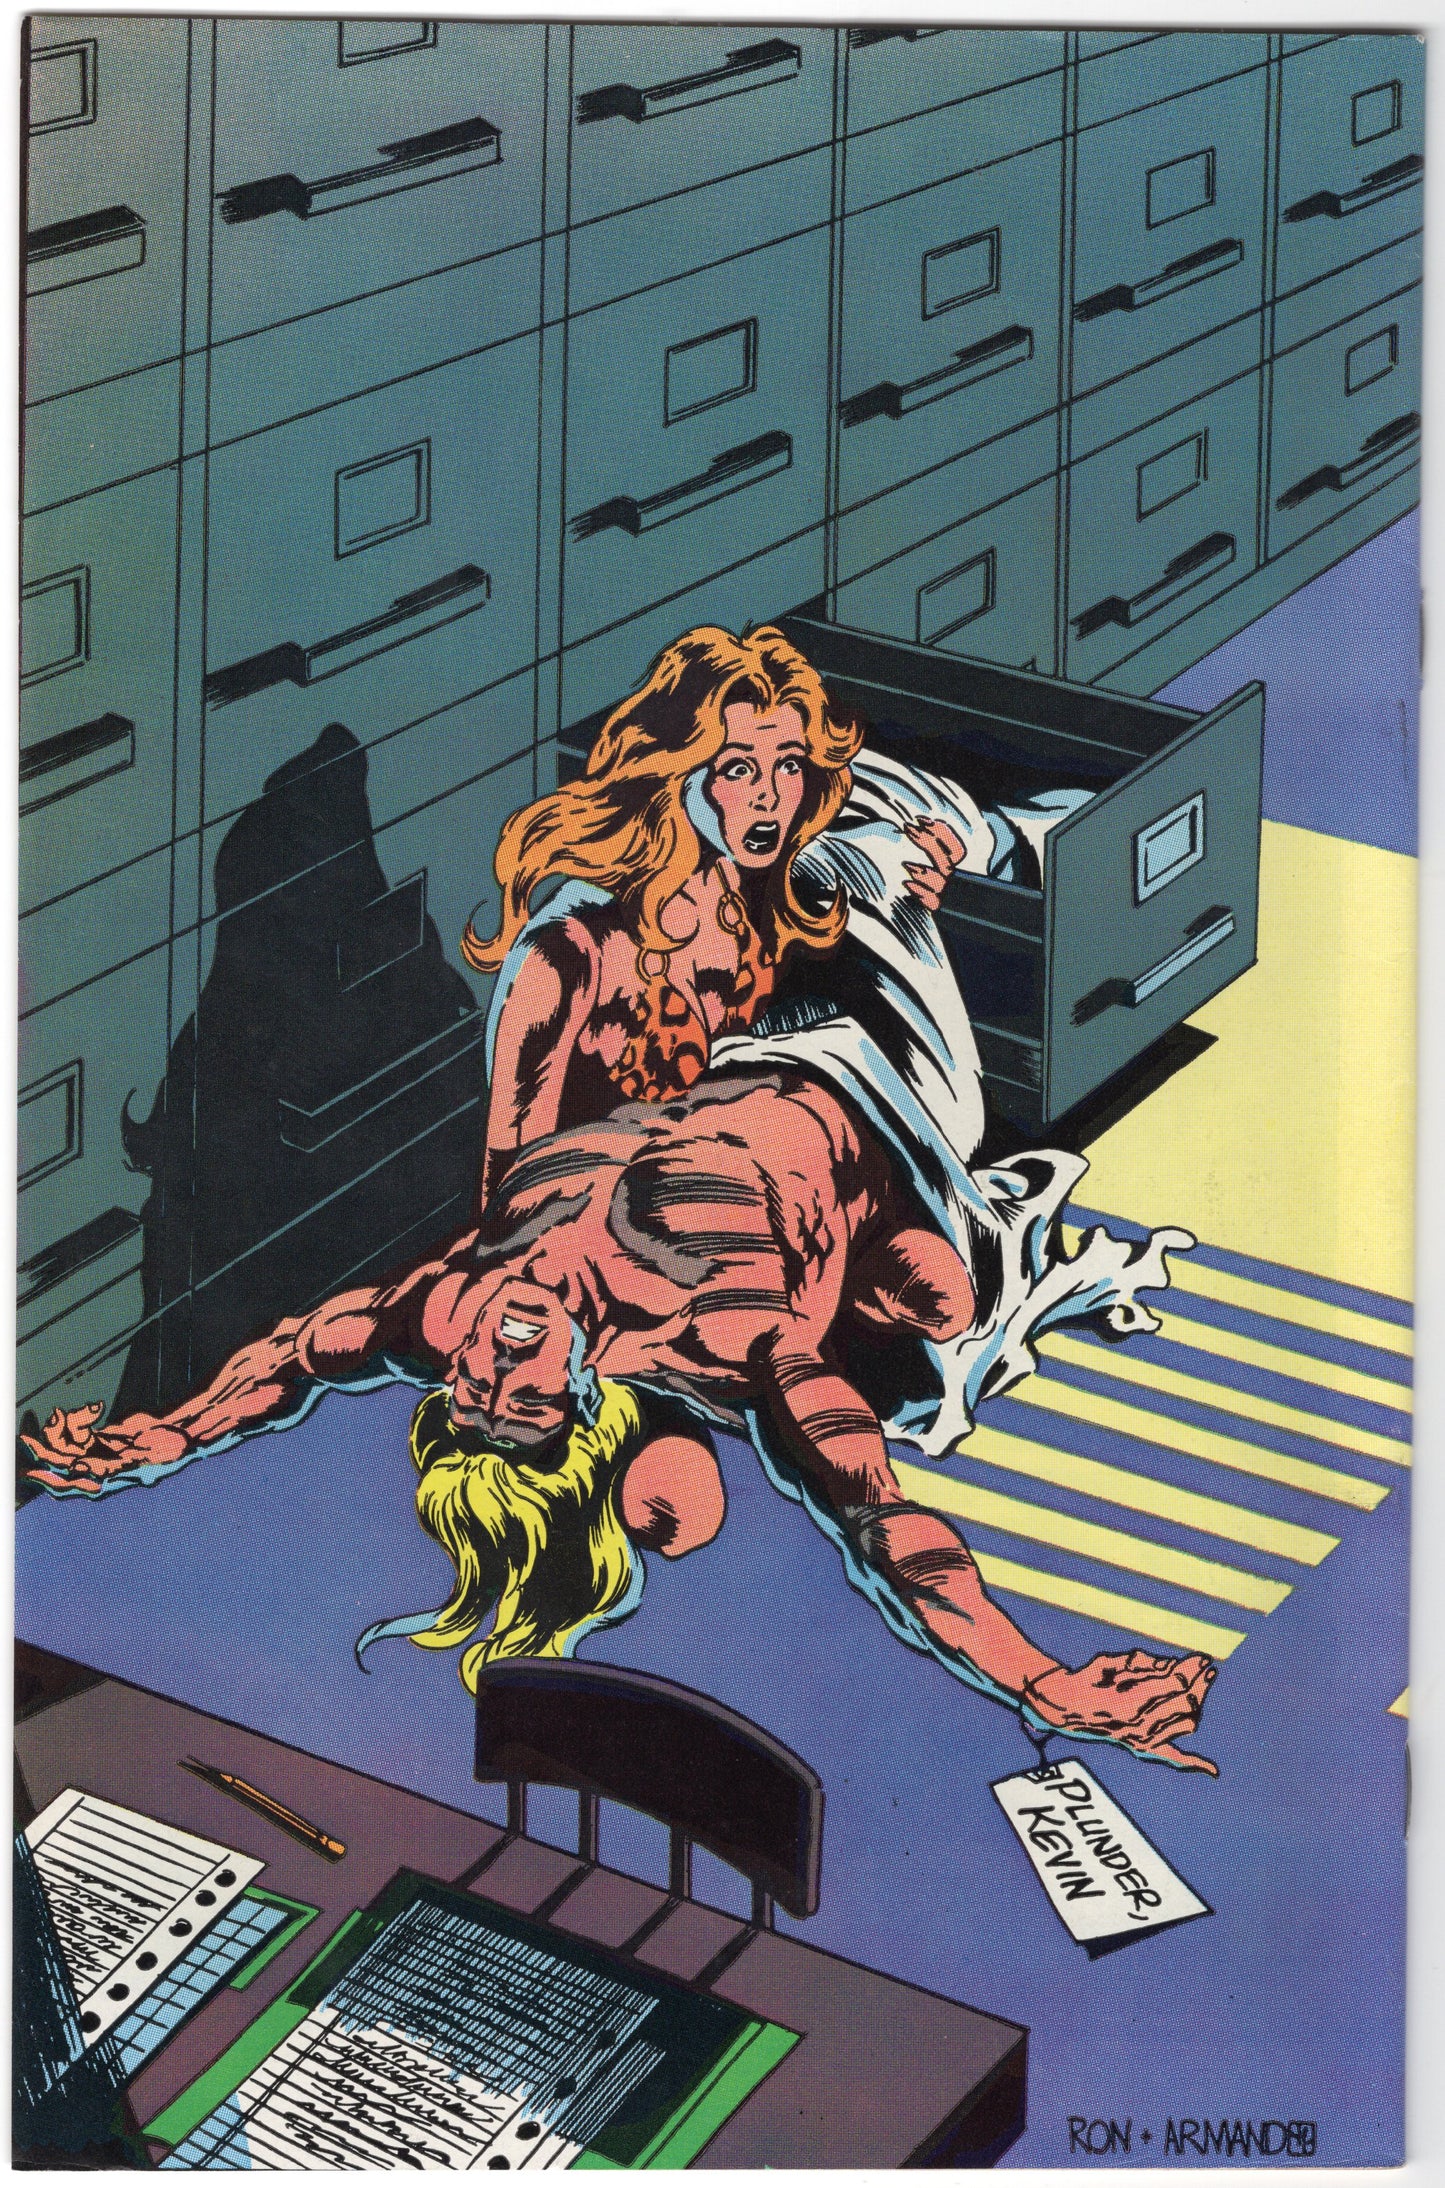 Ka-Zar The Savage - Issue #25 (April, 1983 - Marvel Comics) VF/NM